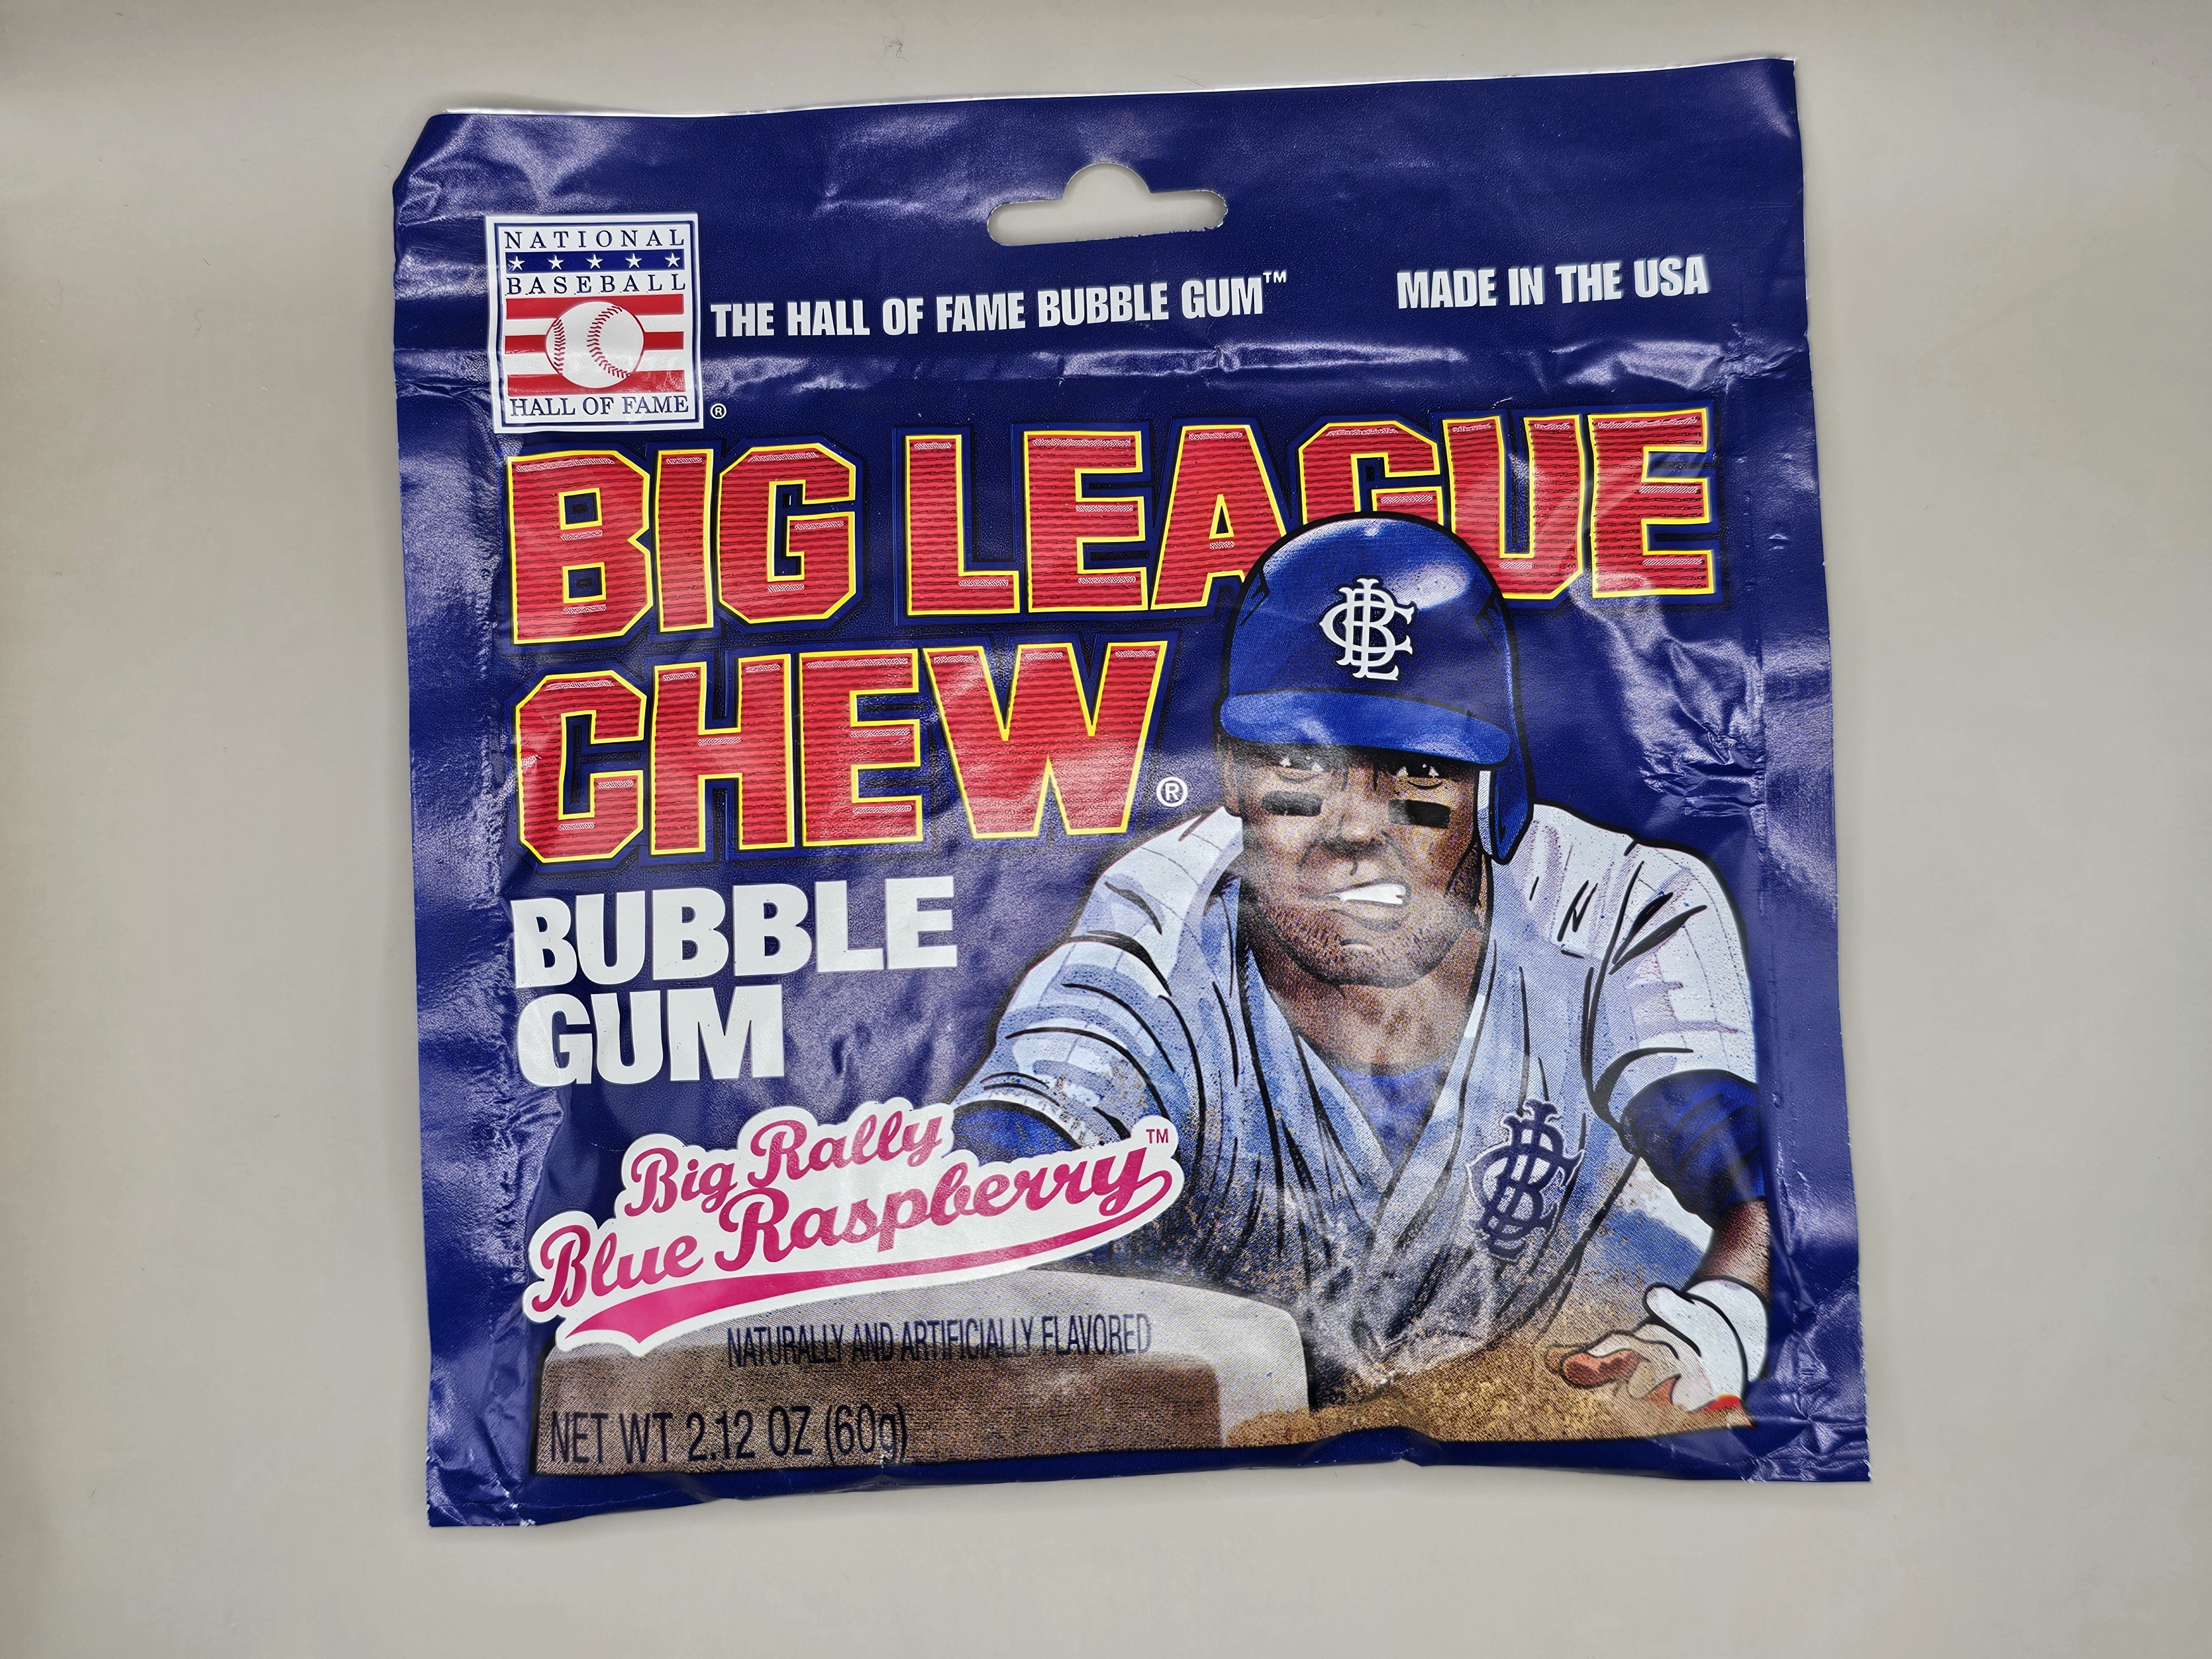 Blue raspberry big league chew.